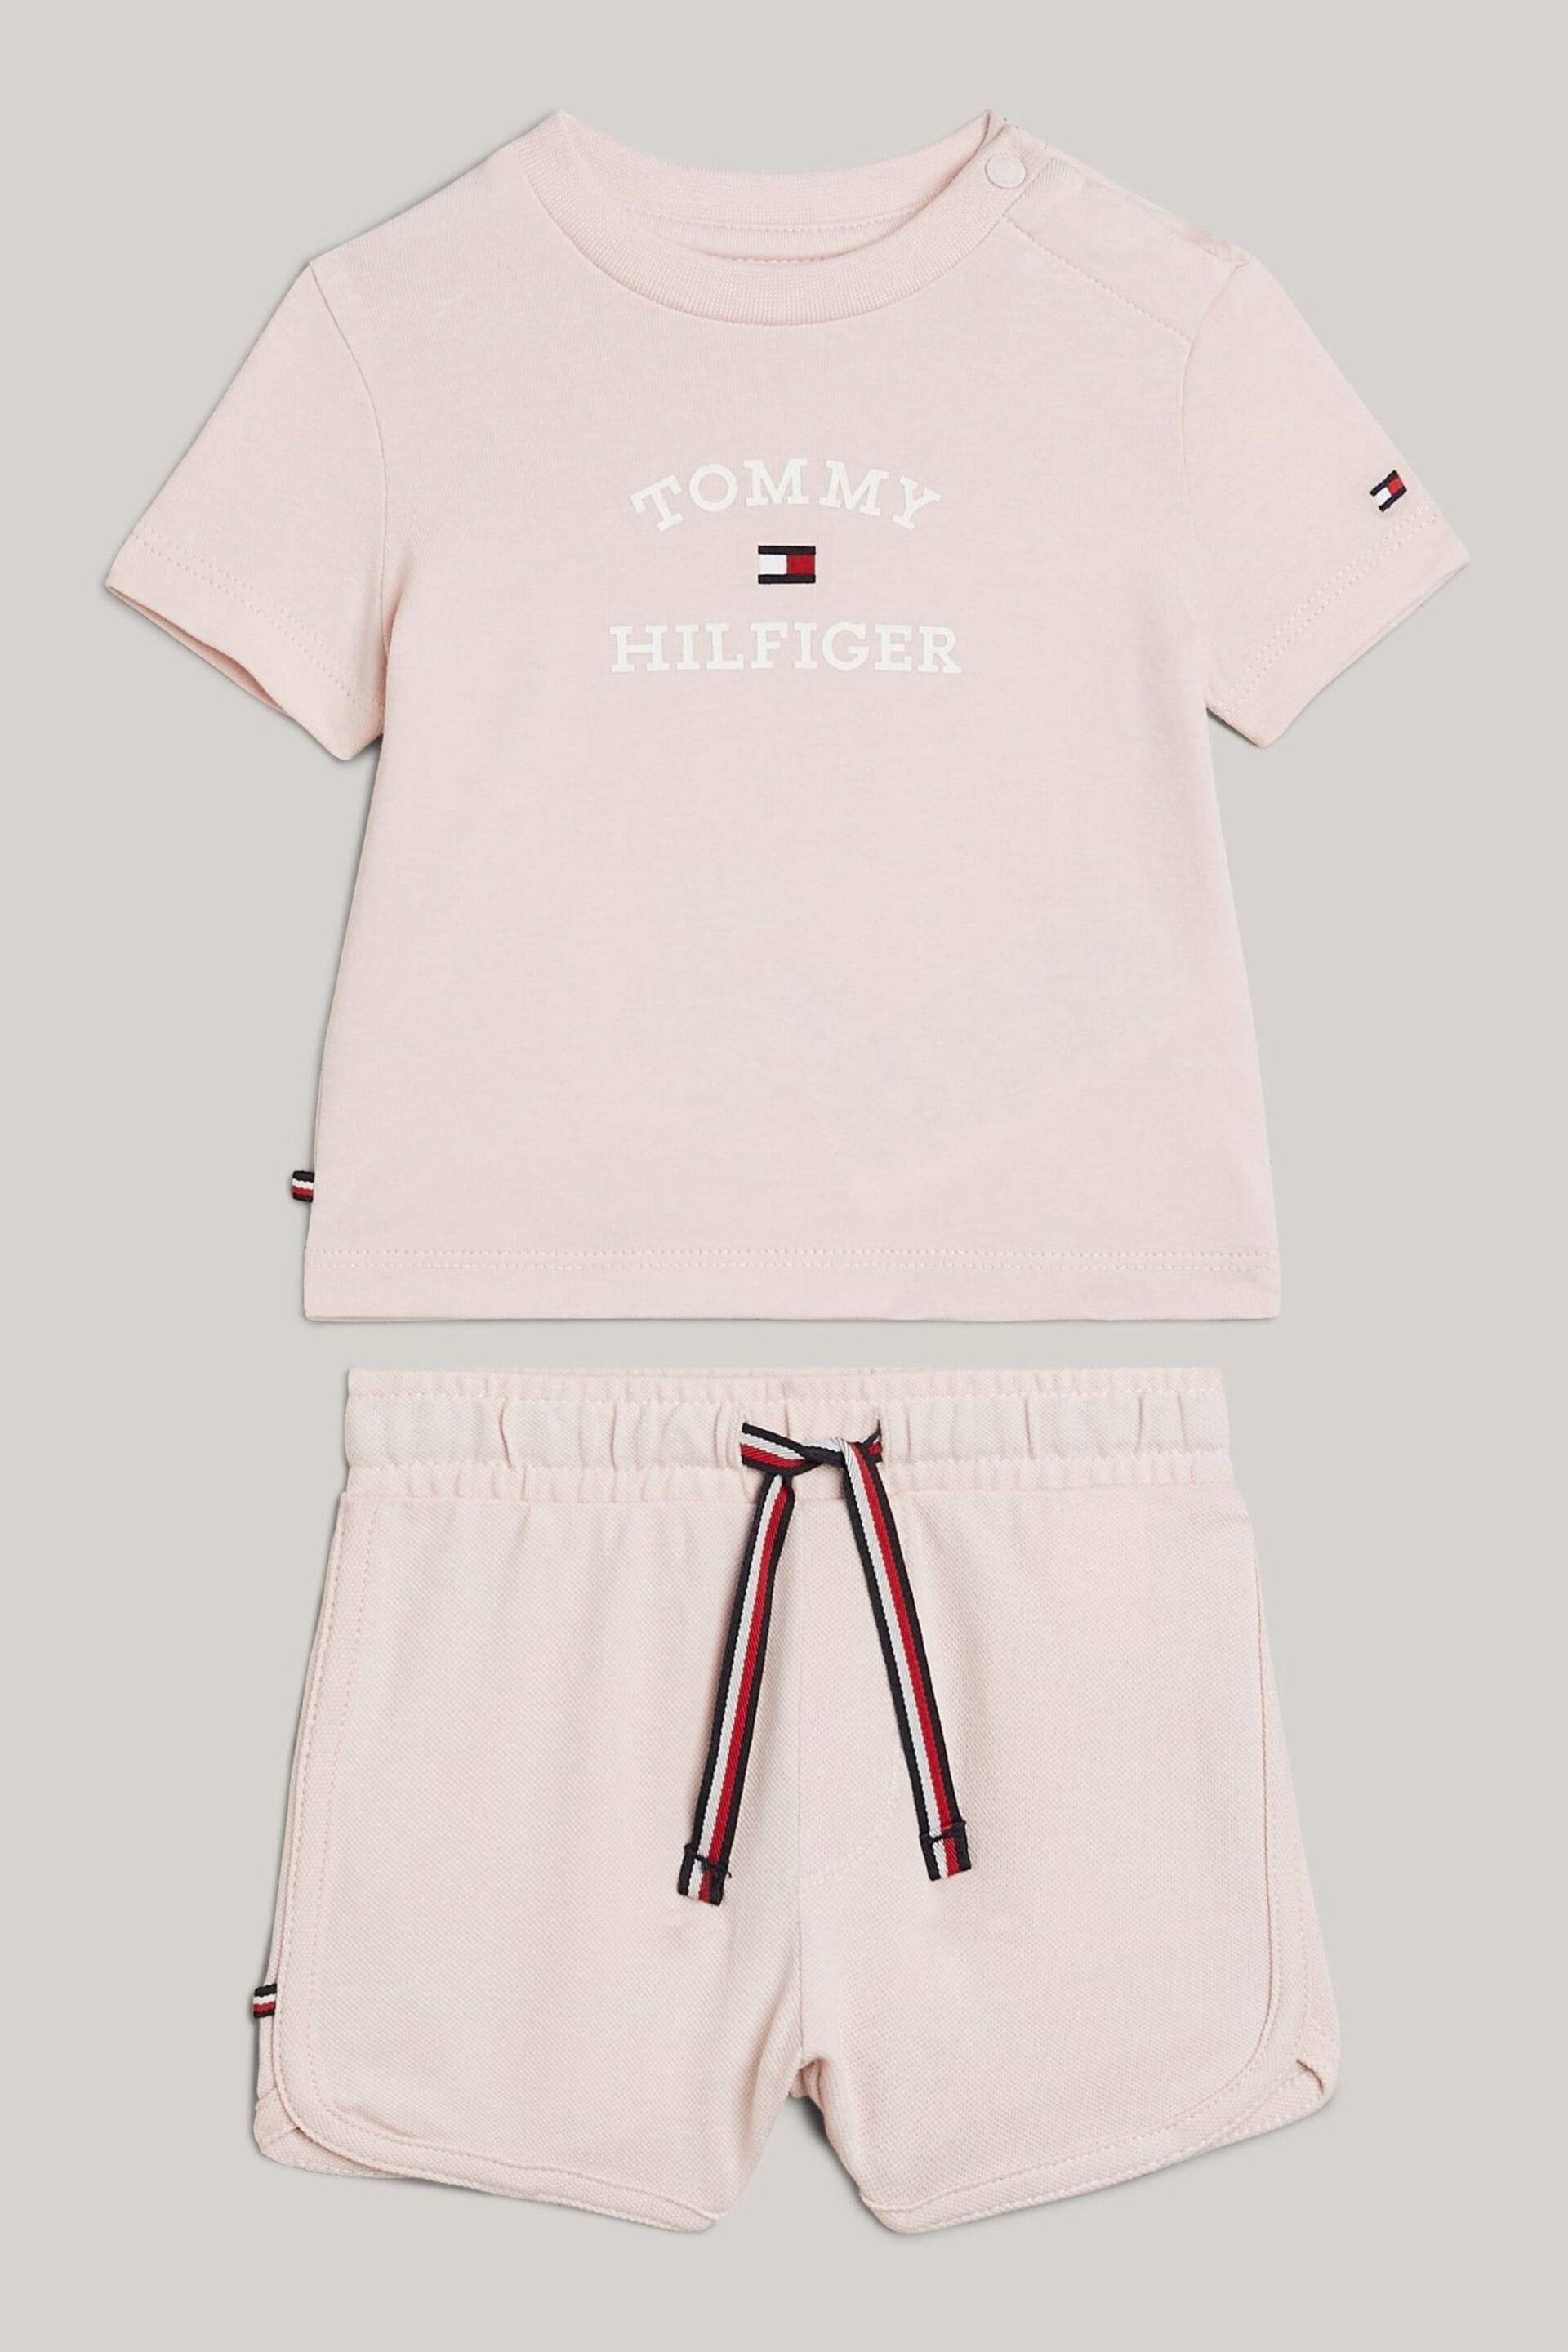 Tommy Hilfiger Baby Pink Logo Shorts Set - Image 1 of 3